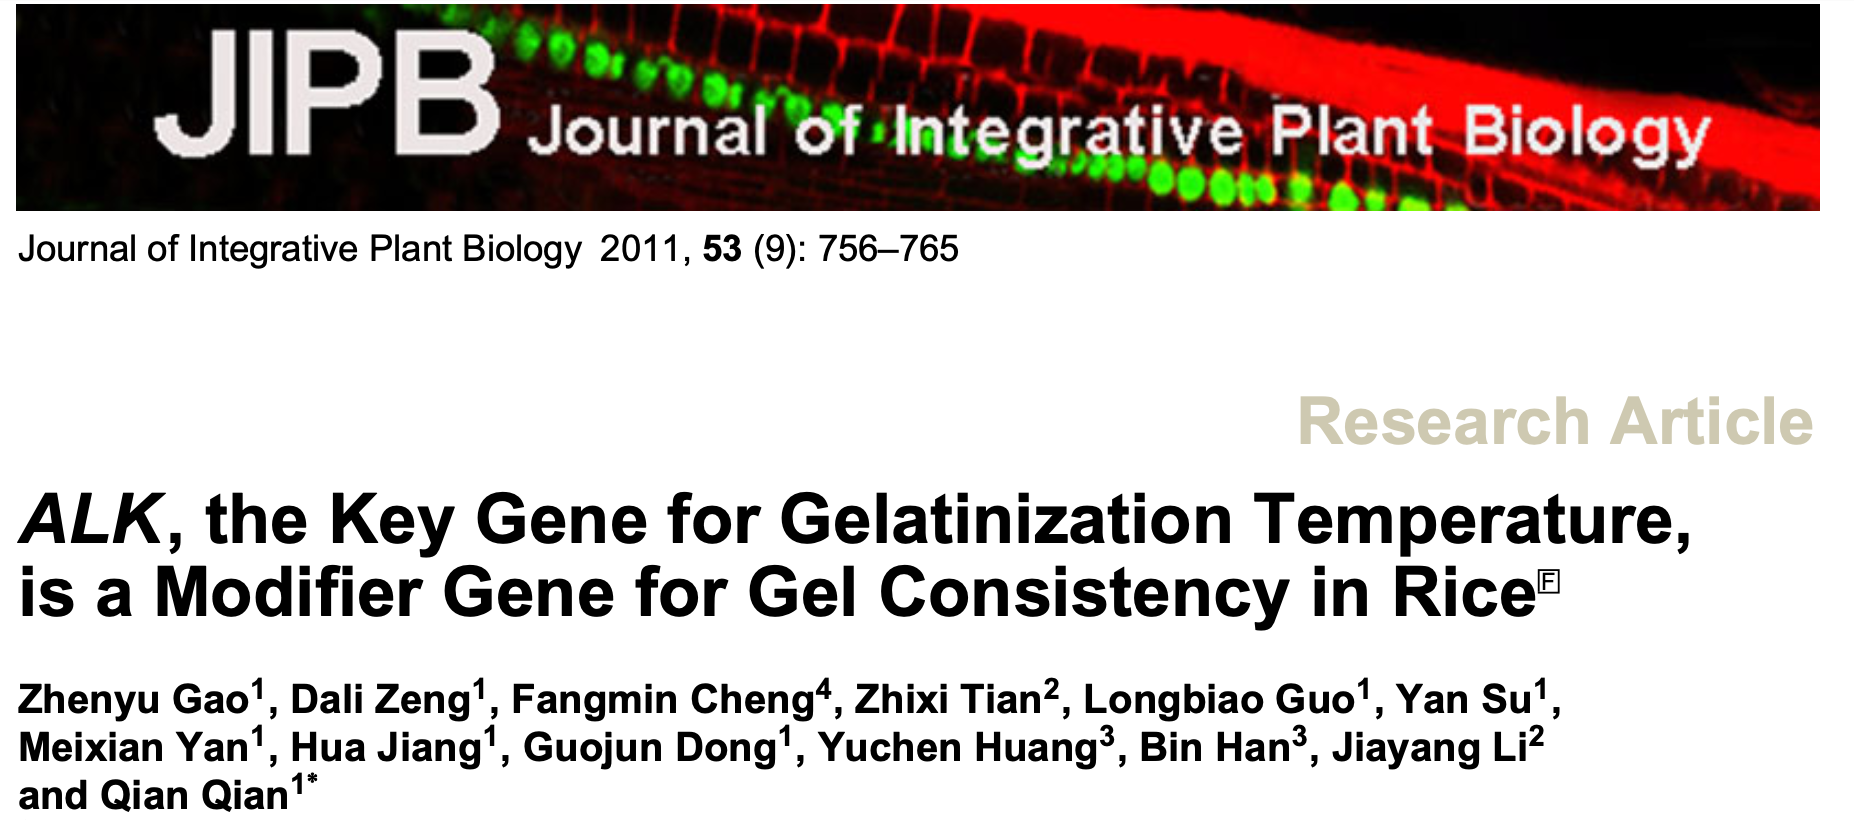 ALK, the Key Gene for Gelatinization Temperature, is a Modifier Gene for Gel Consistency in Rice